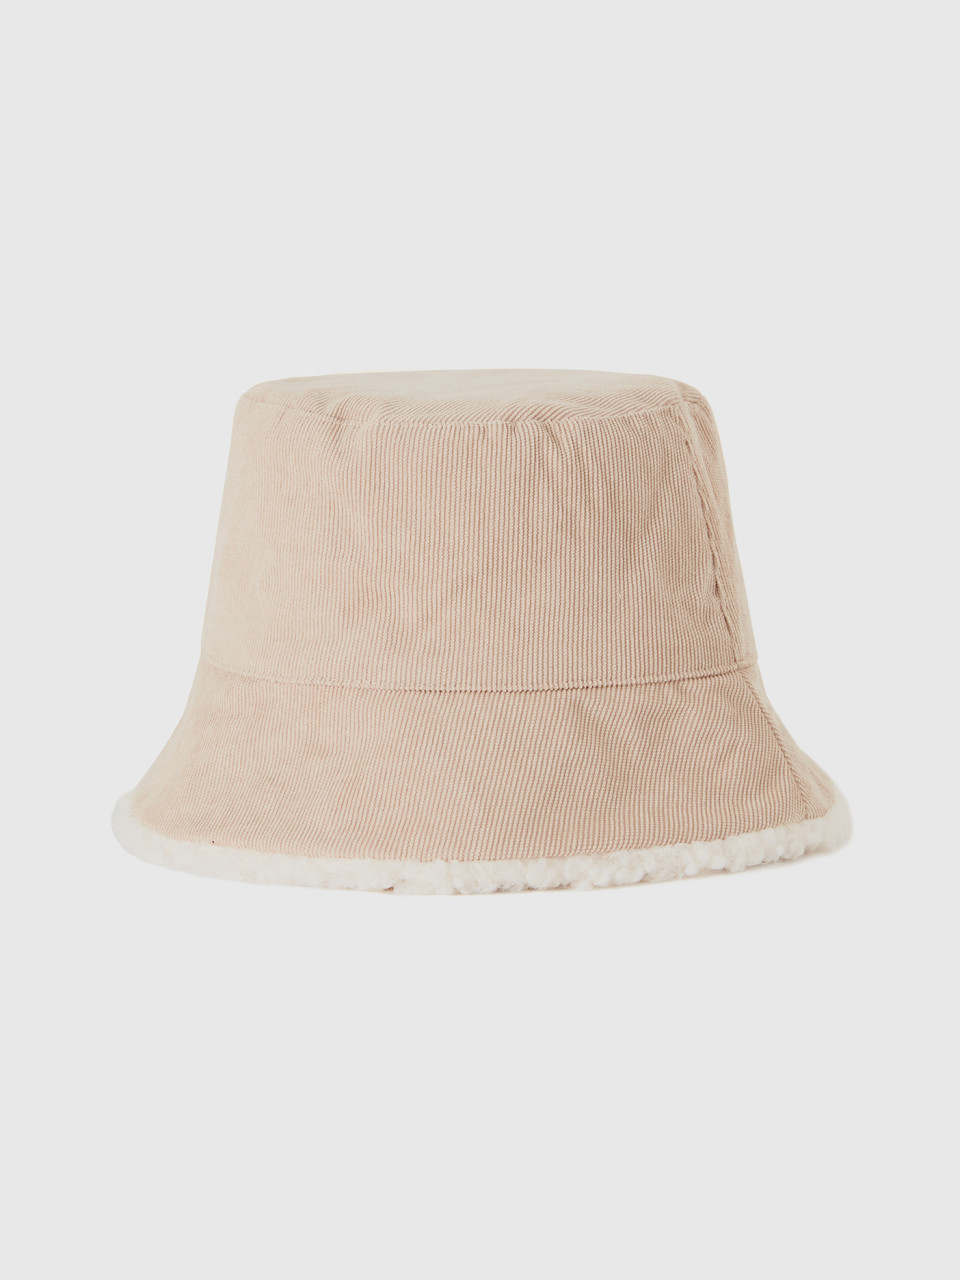 Benetton, Reversible Bucket Hat, Creamy White, Women